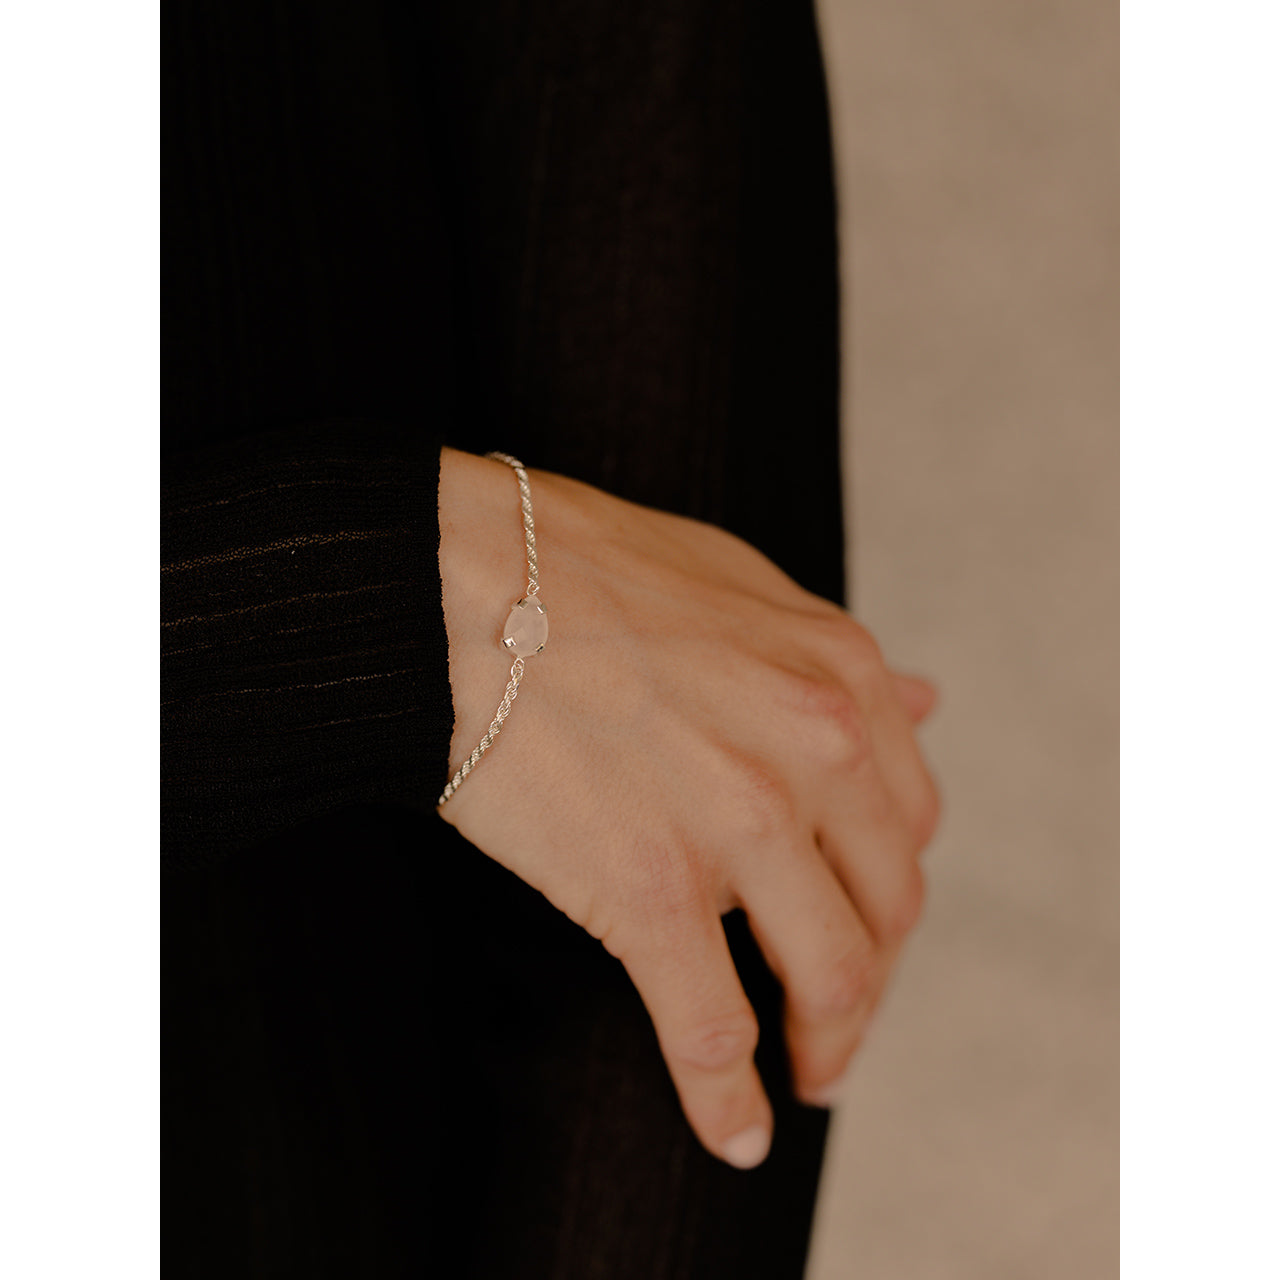 This charming bracelet showcases a lovely rose quartz in a graceful drop shape.